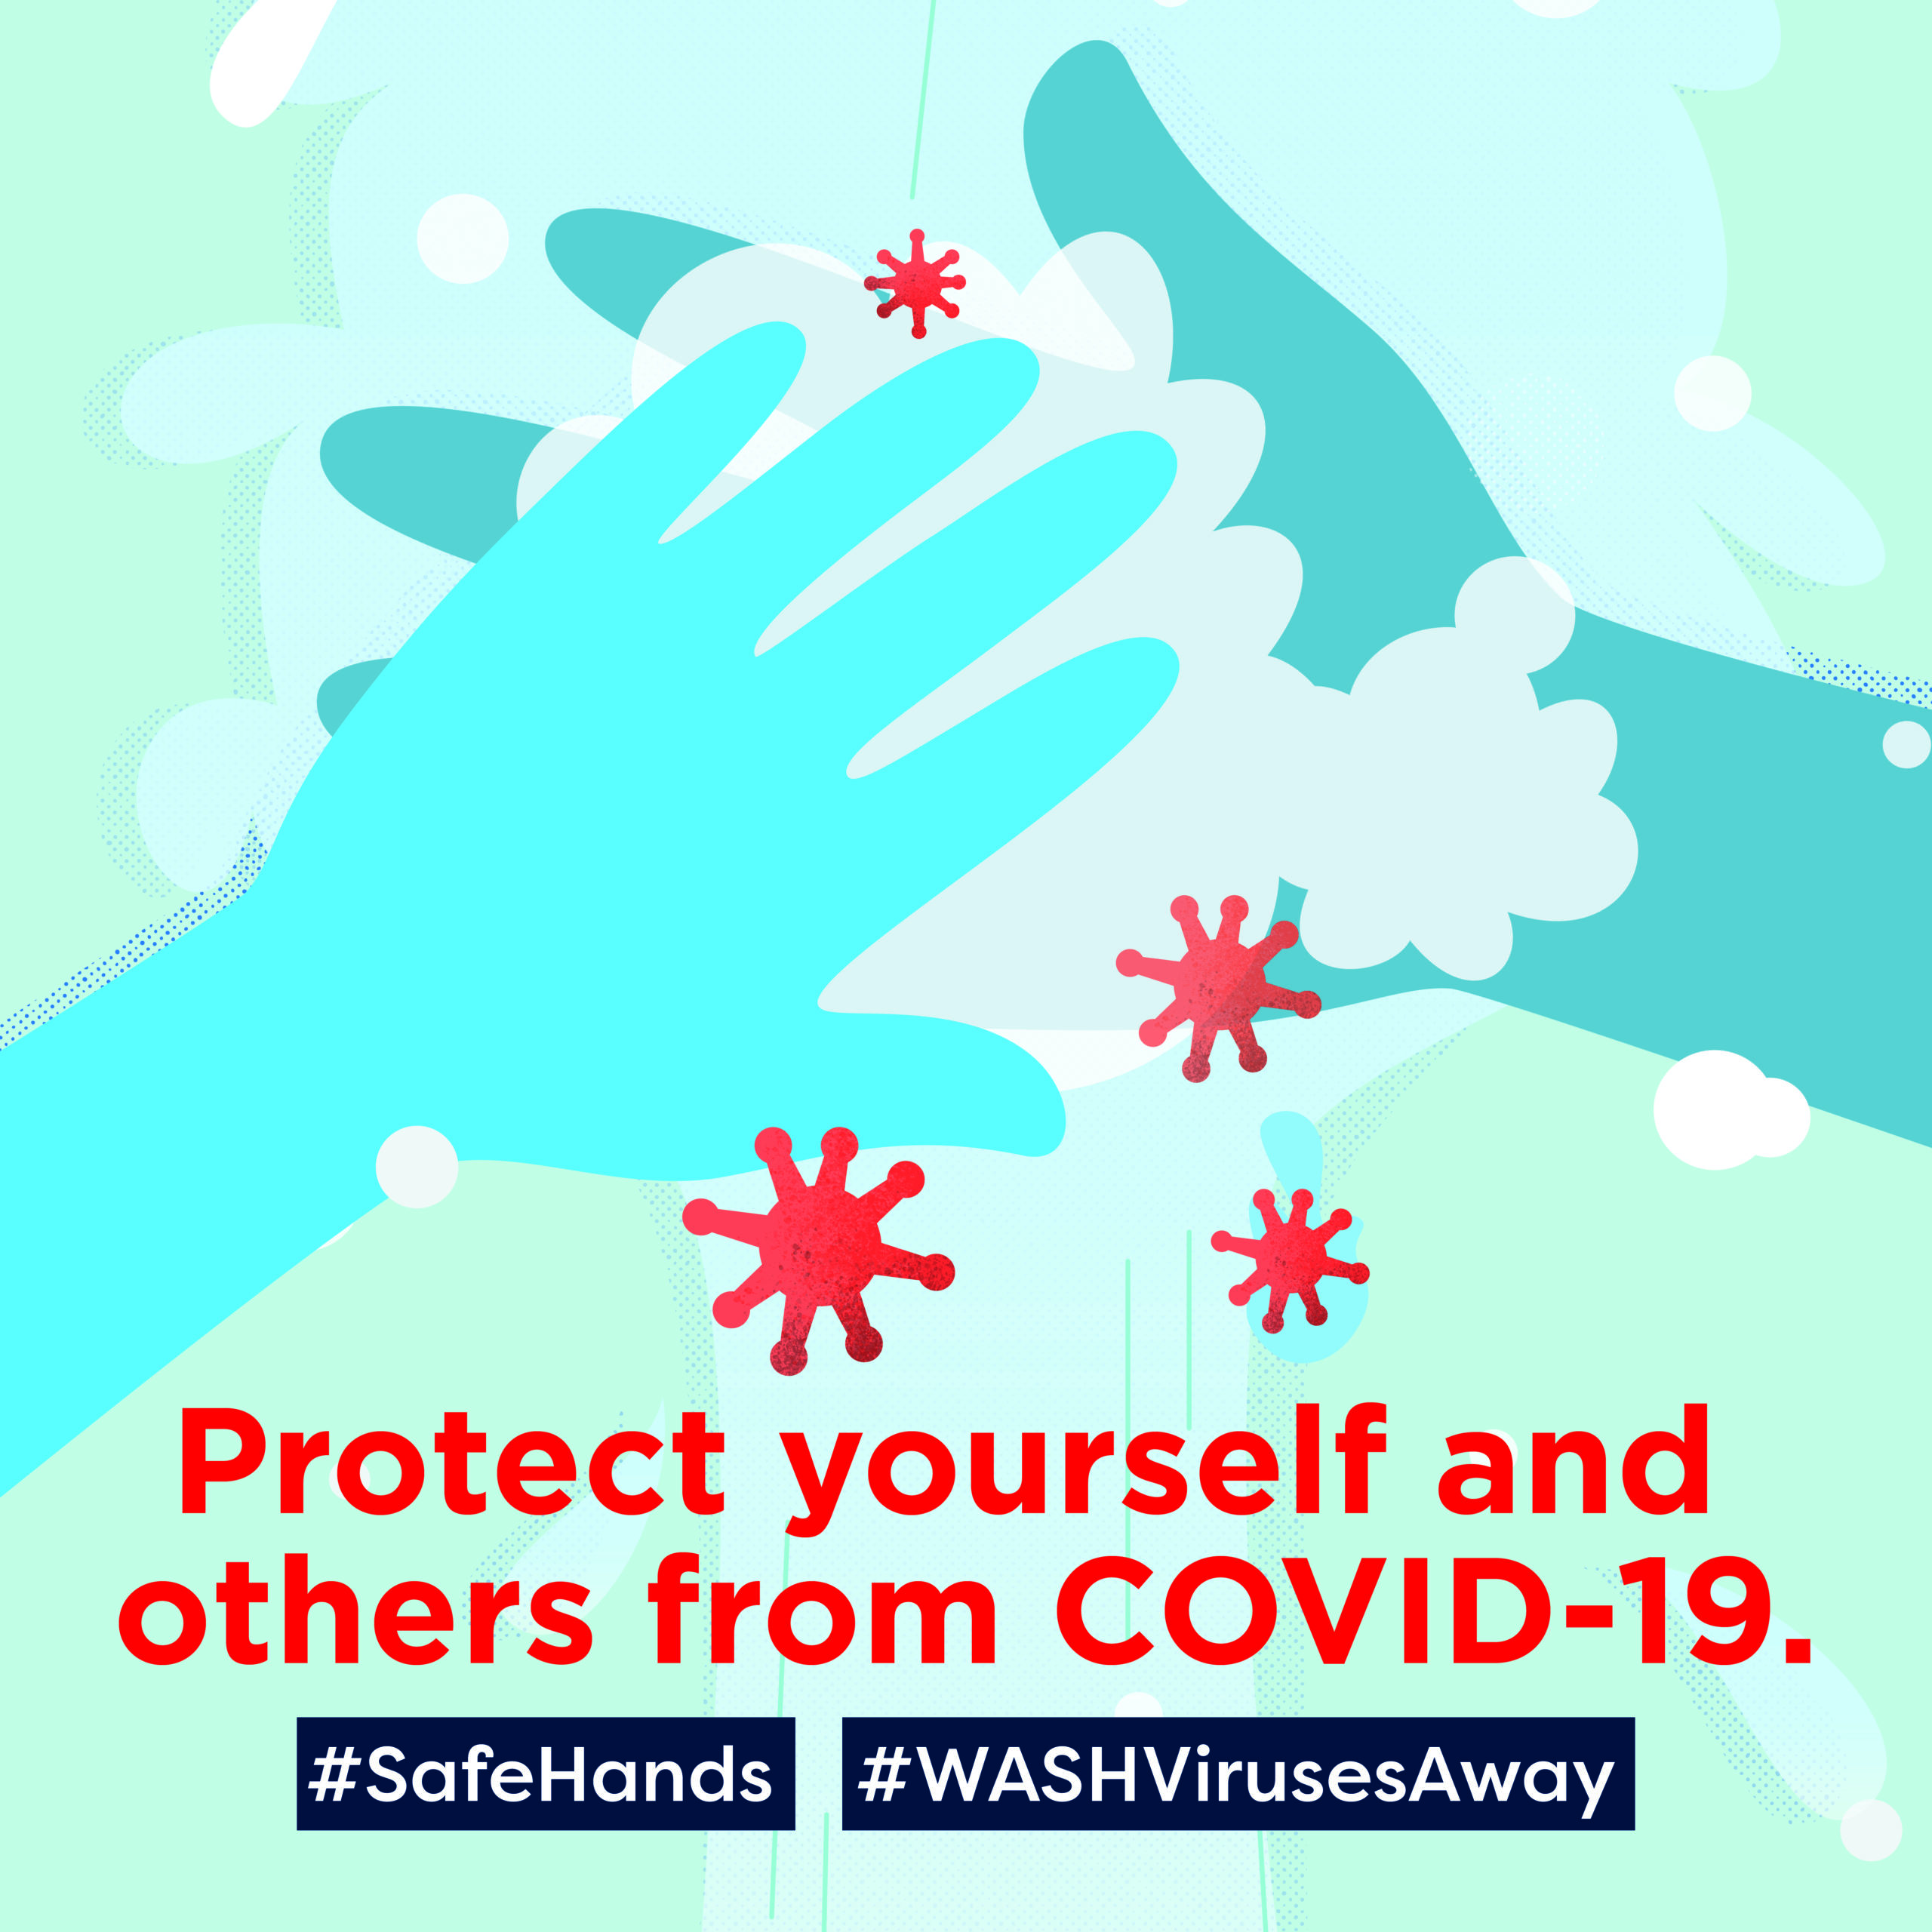 WASH Viruses Away” on World Water Day | The Global Handwashing ...